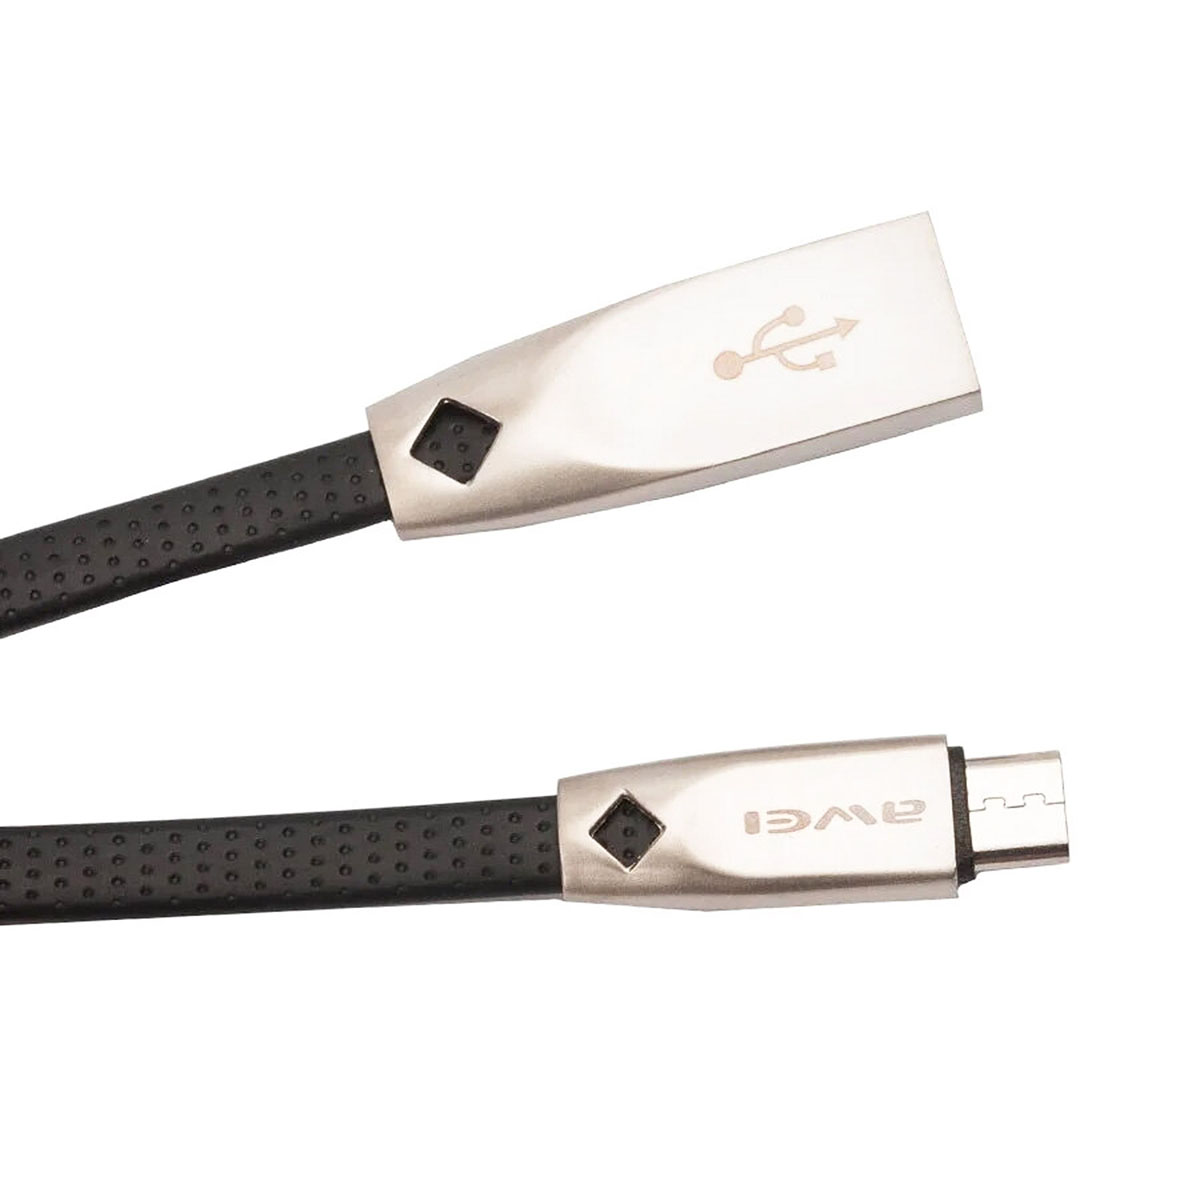 AWEI CL-96 FAST кабель Micro USB, 2.4A, длина 1 метр, цвет черный.